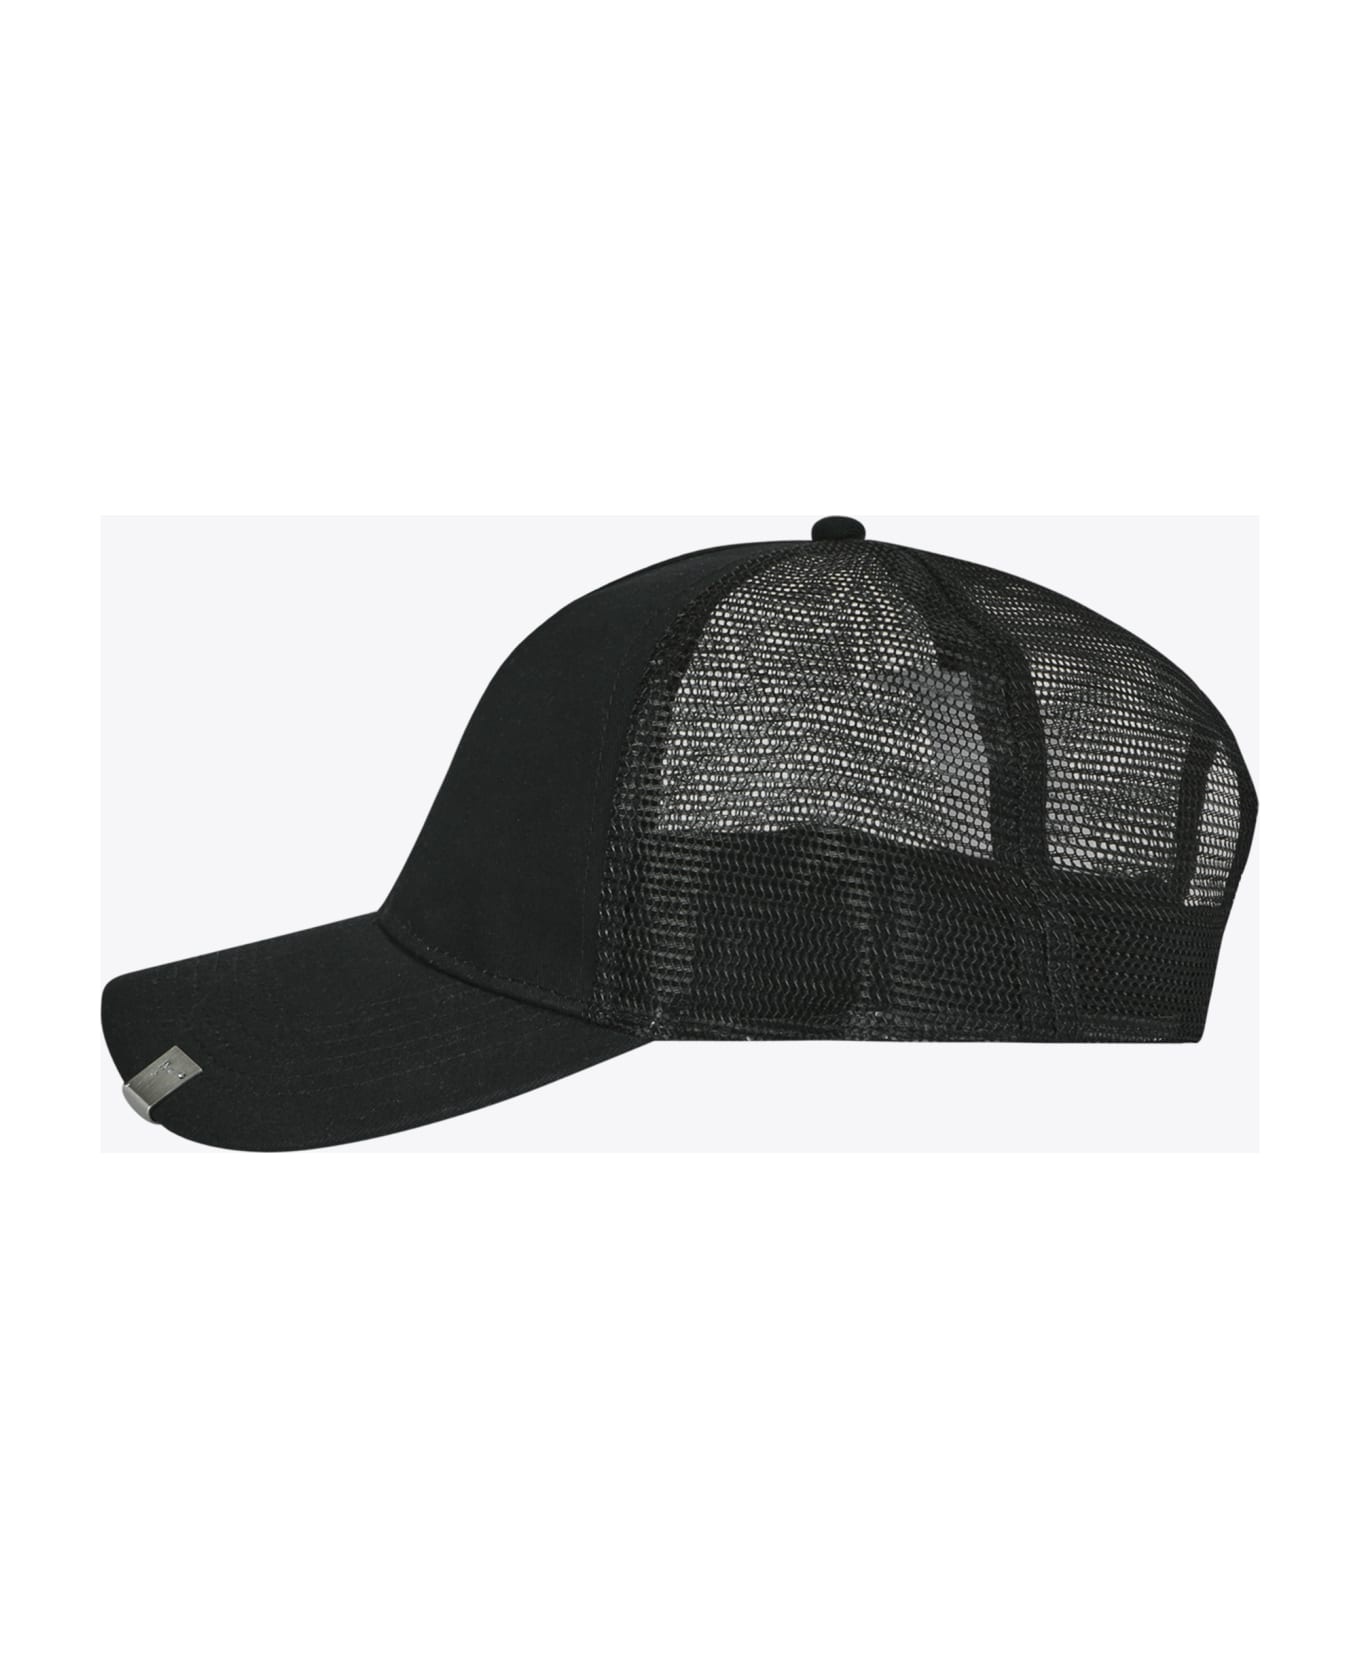 Lightercap Trucker Cap Black baseball cap with mesh at back - Lightercap Trucker Cap - 2